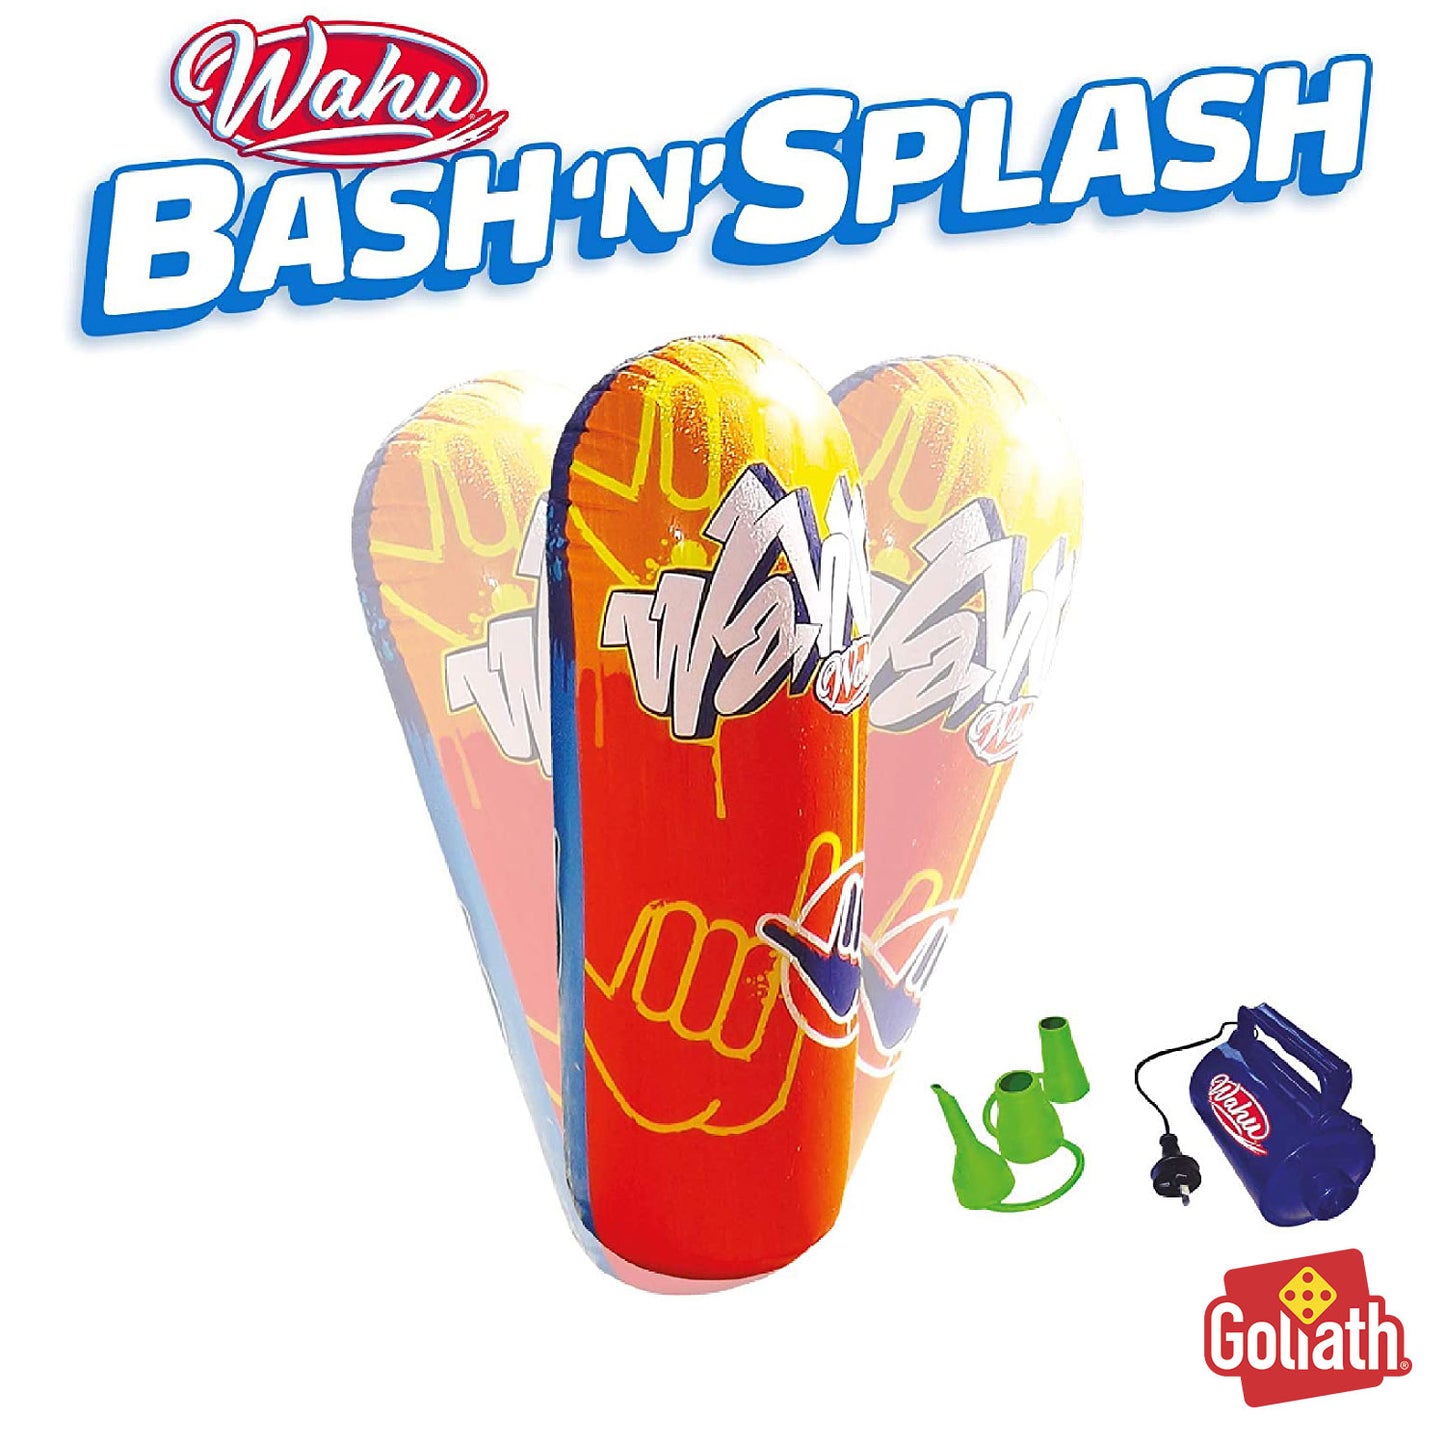 Goliath - Wahu Bash &amp; Splash Punching Bag